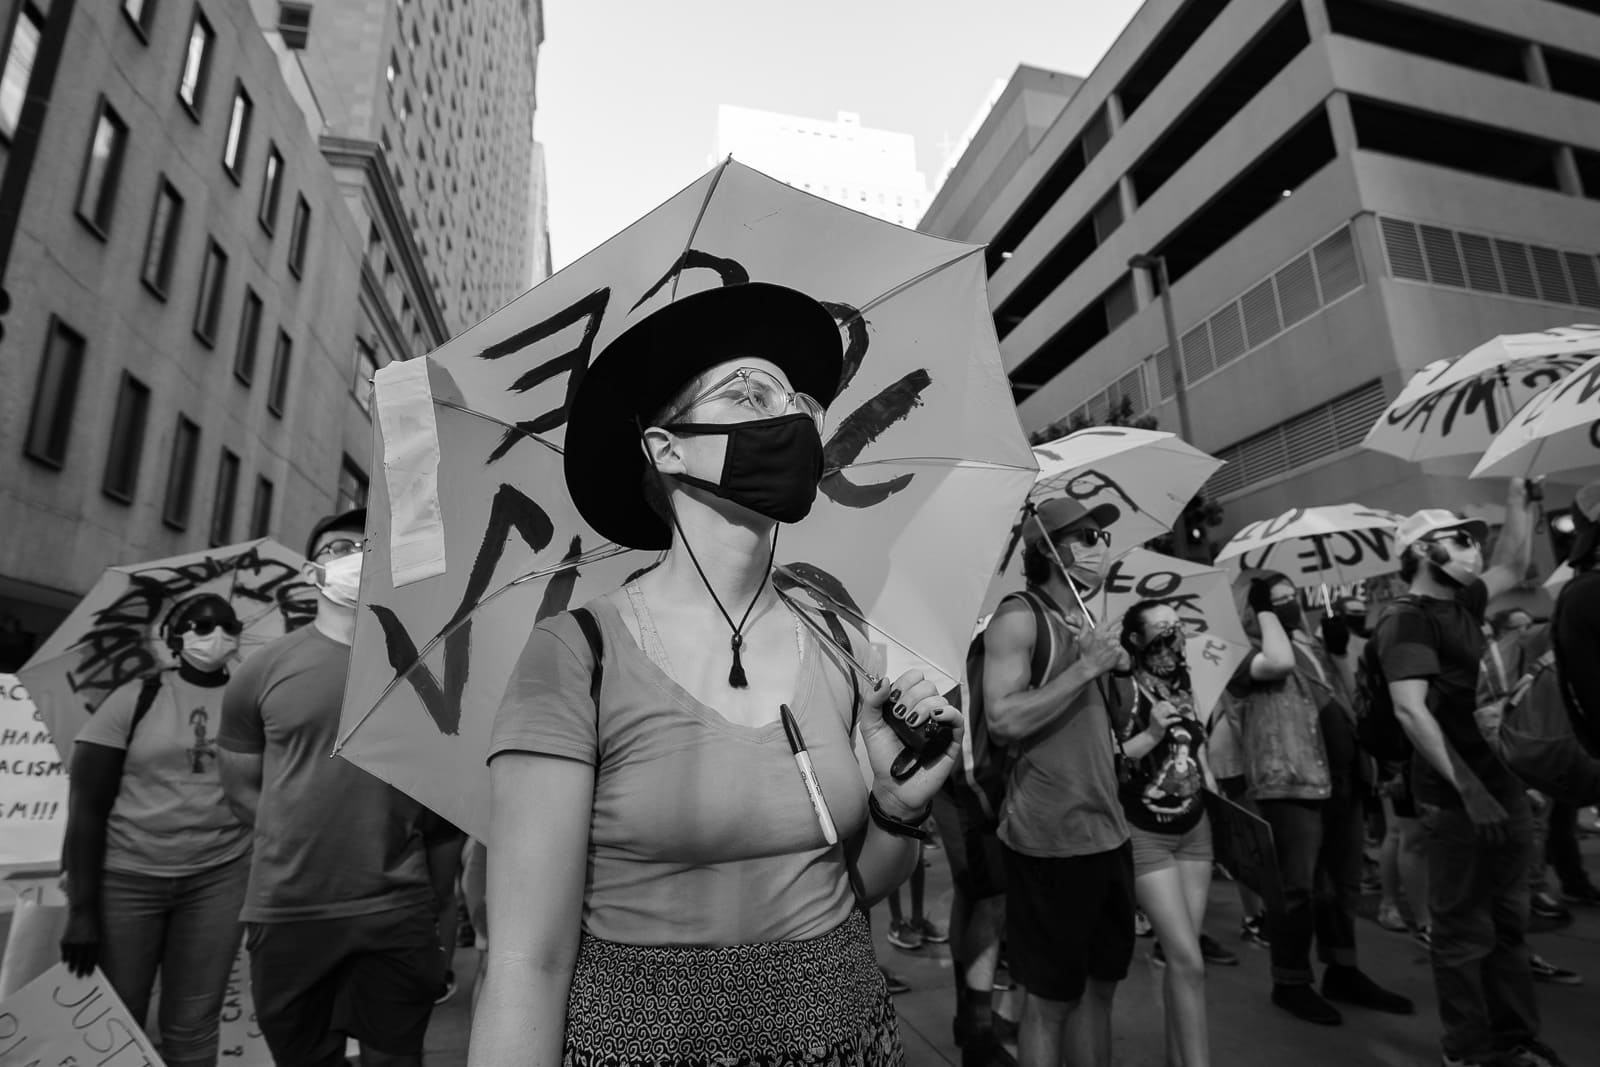 Black Lives Matter protest in Dallas, Texas